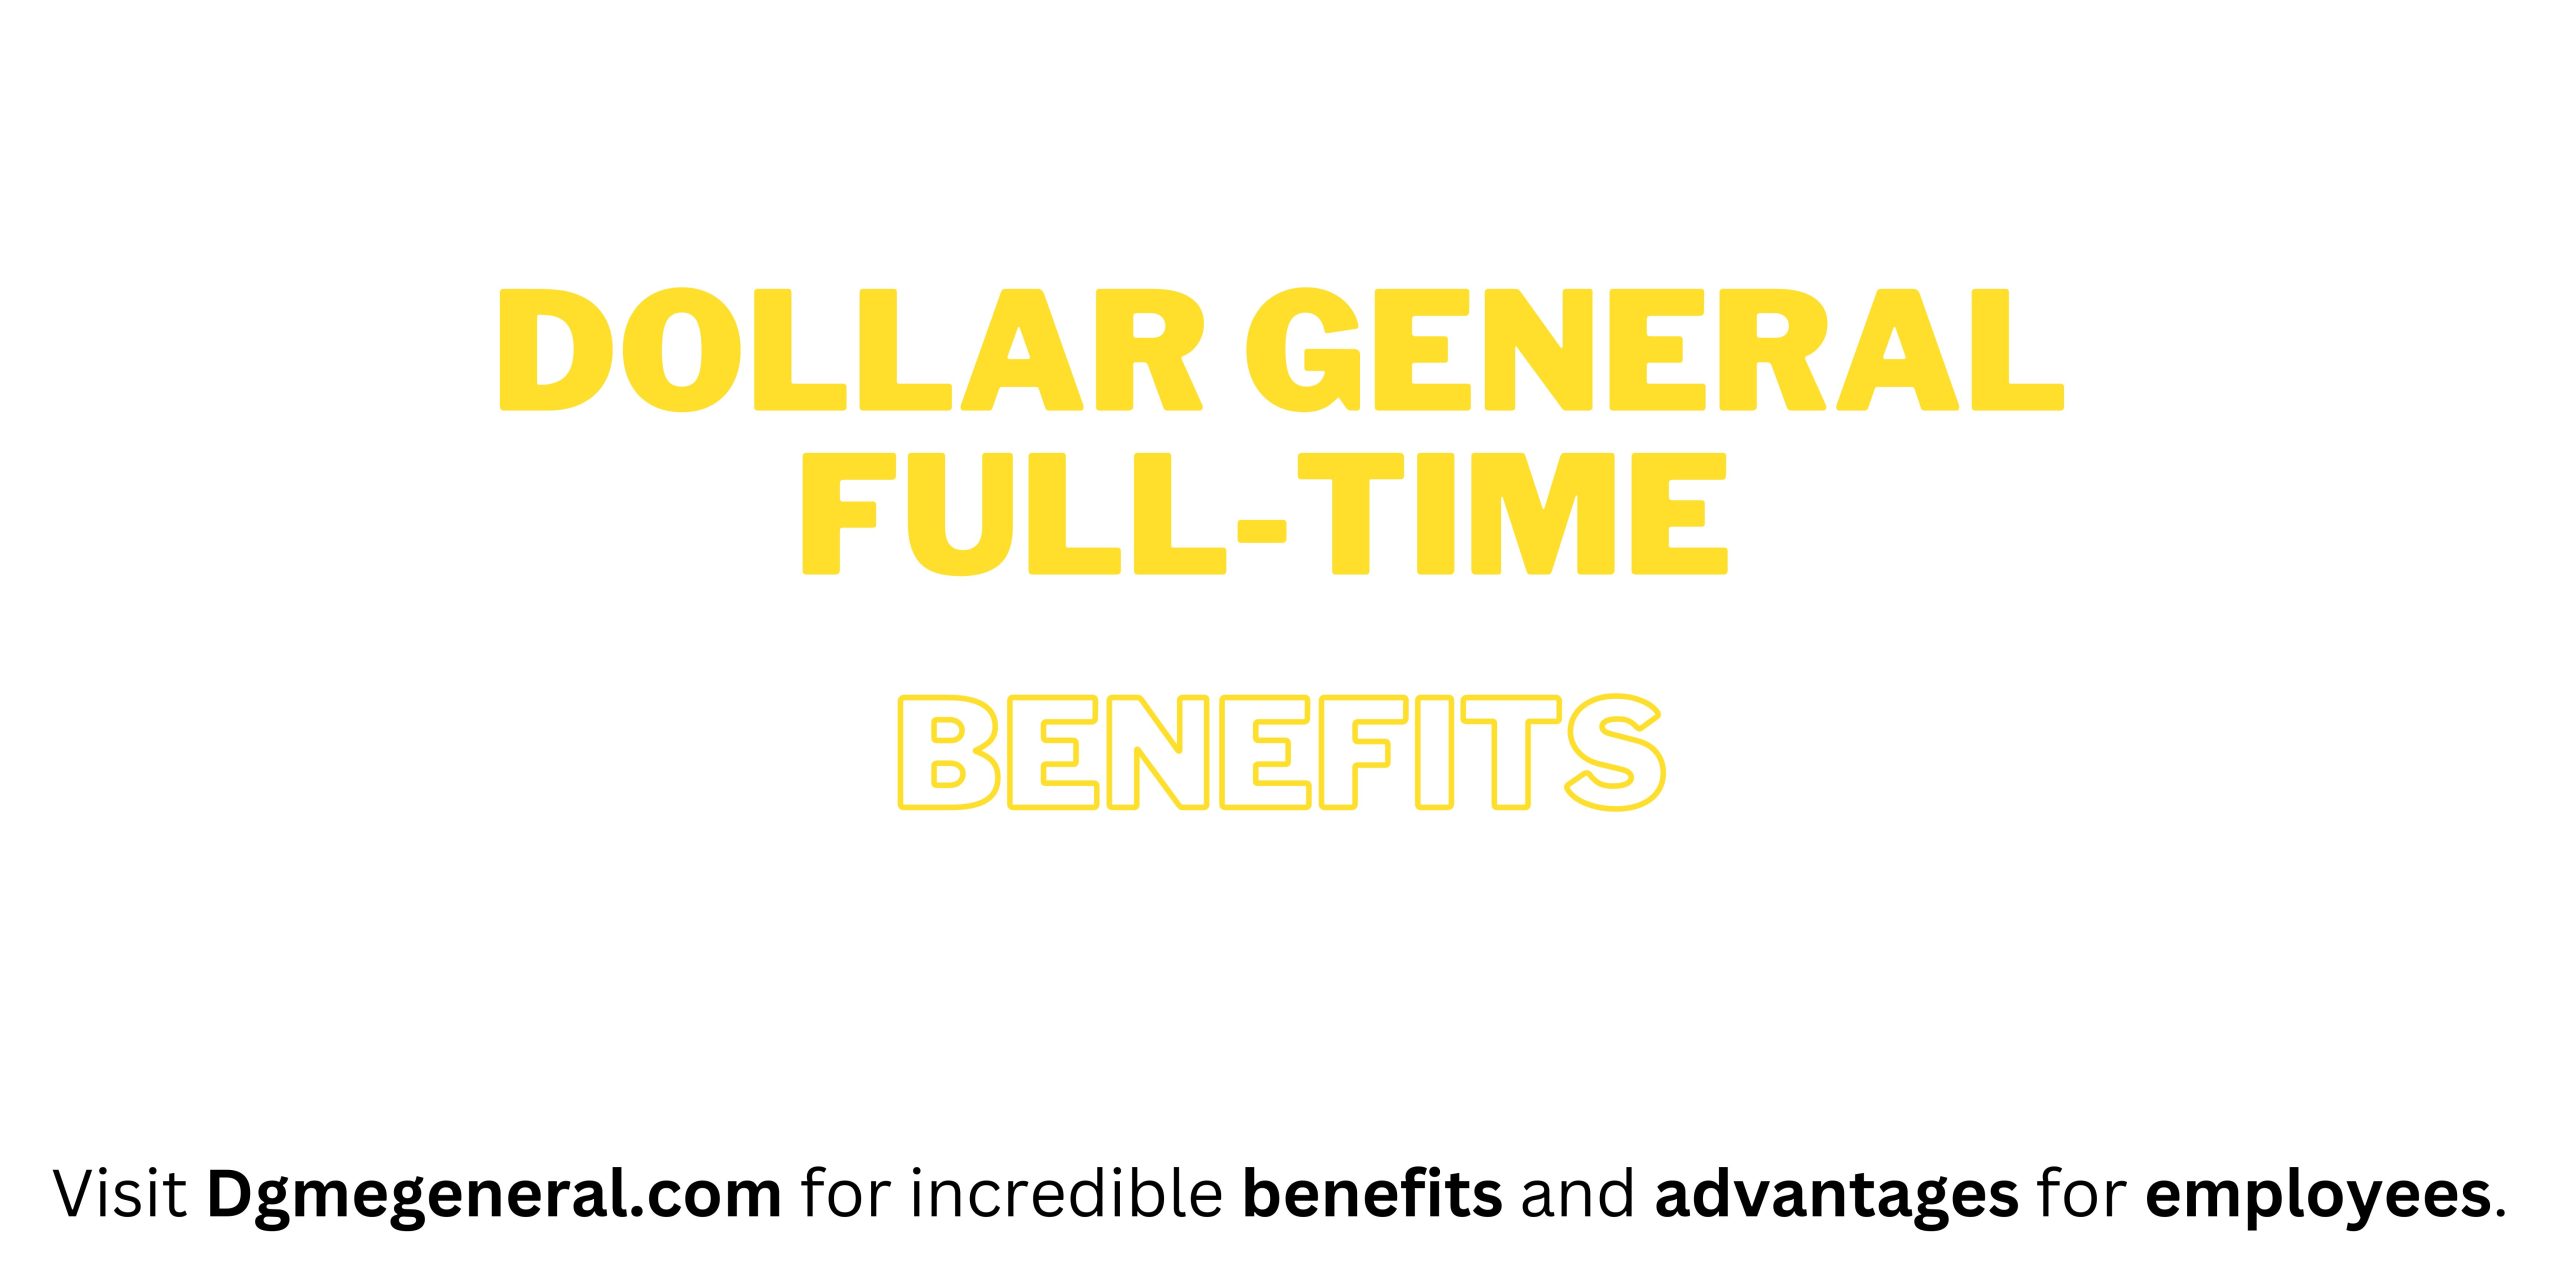 Dollar General Full-Time Benefits